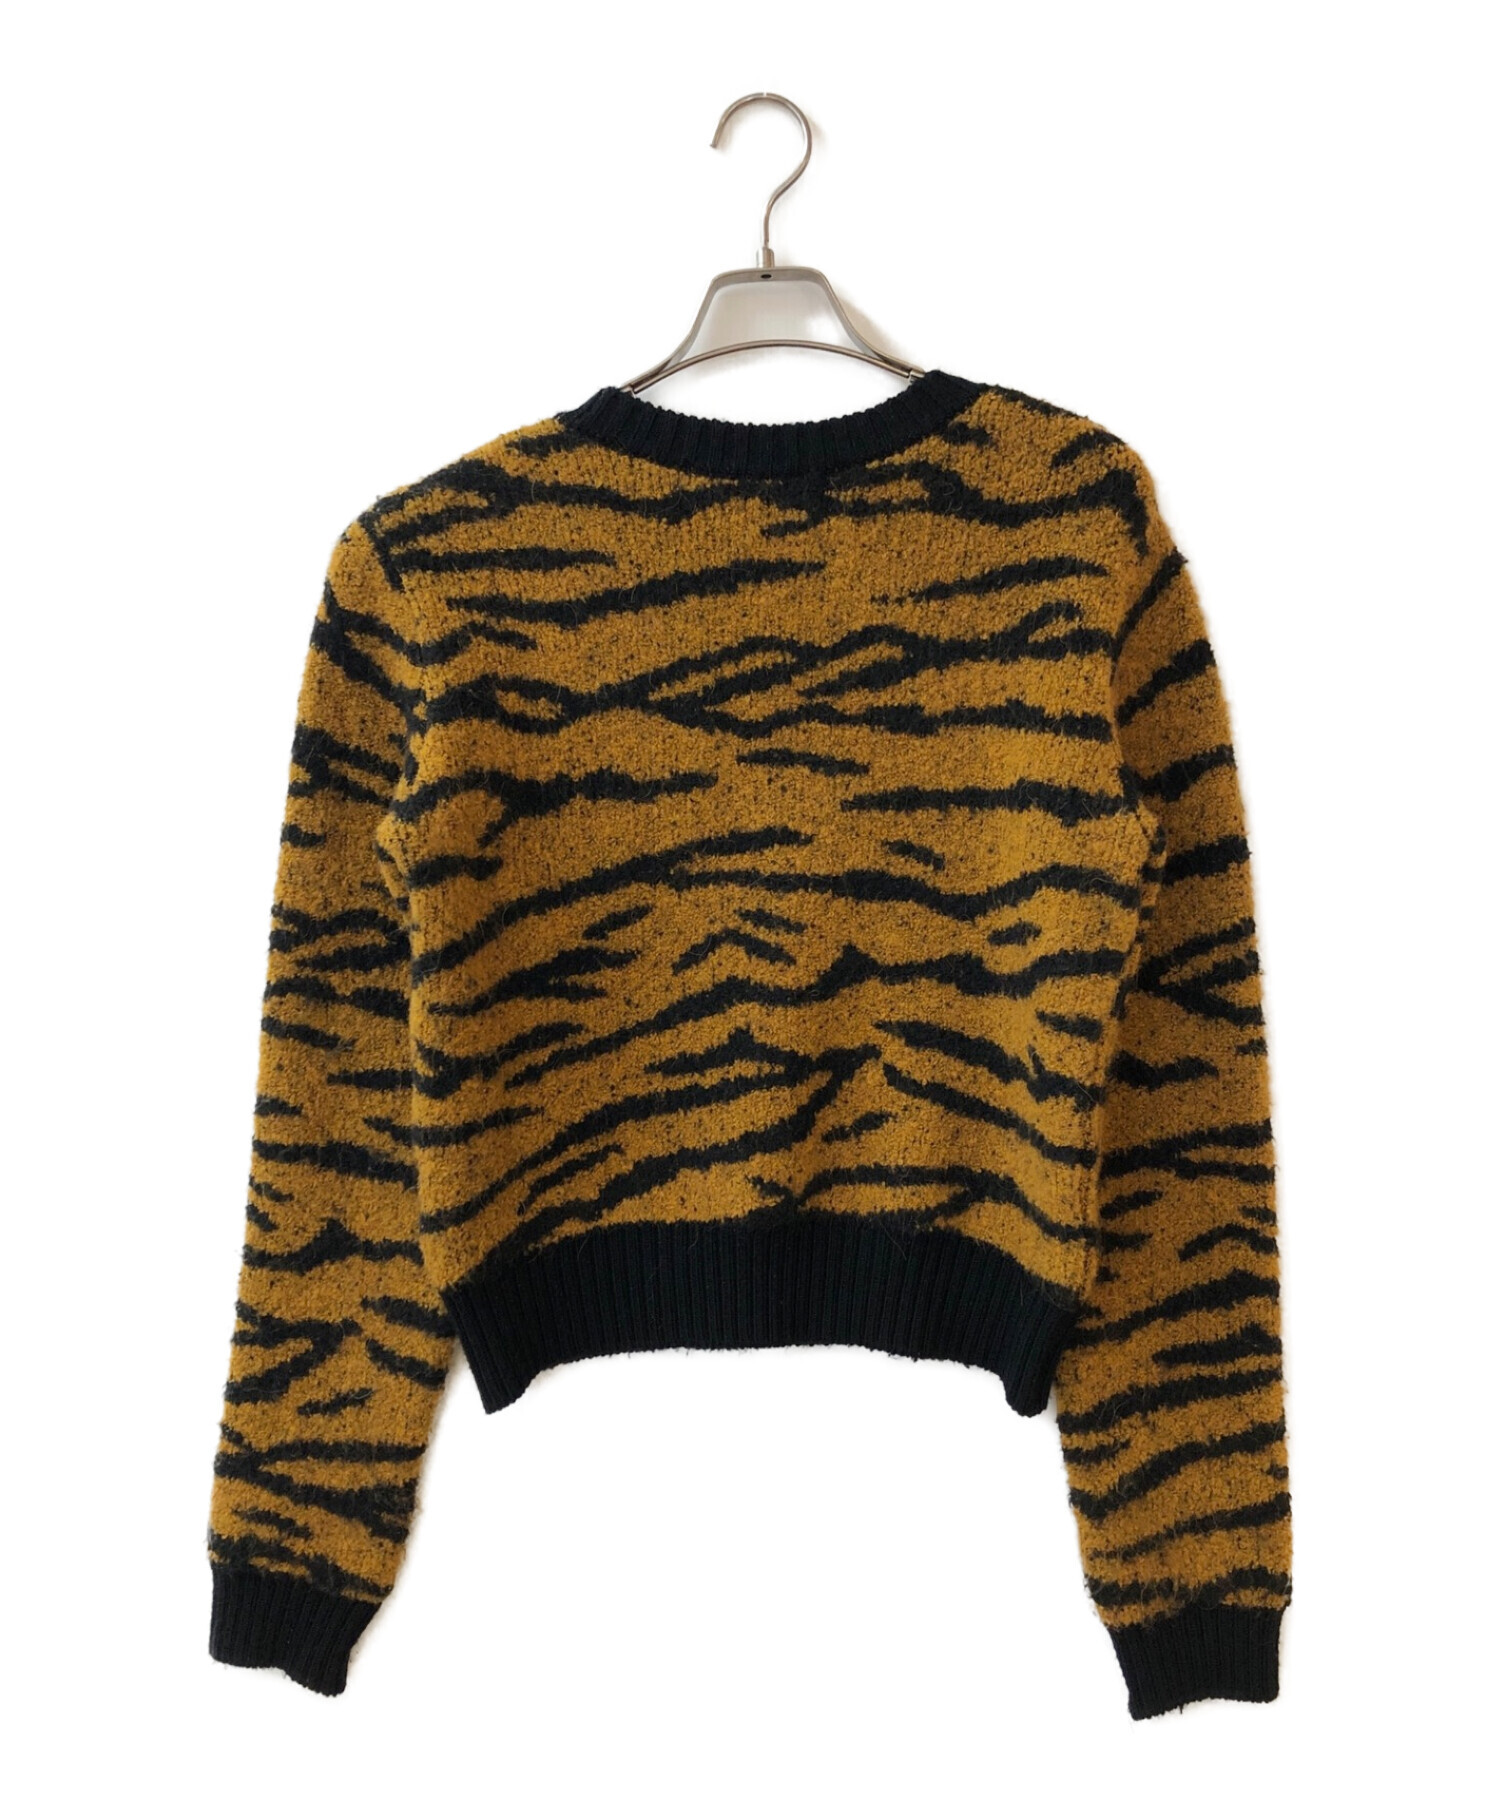 Tiger Jacquard Knit Sweater